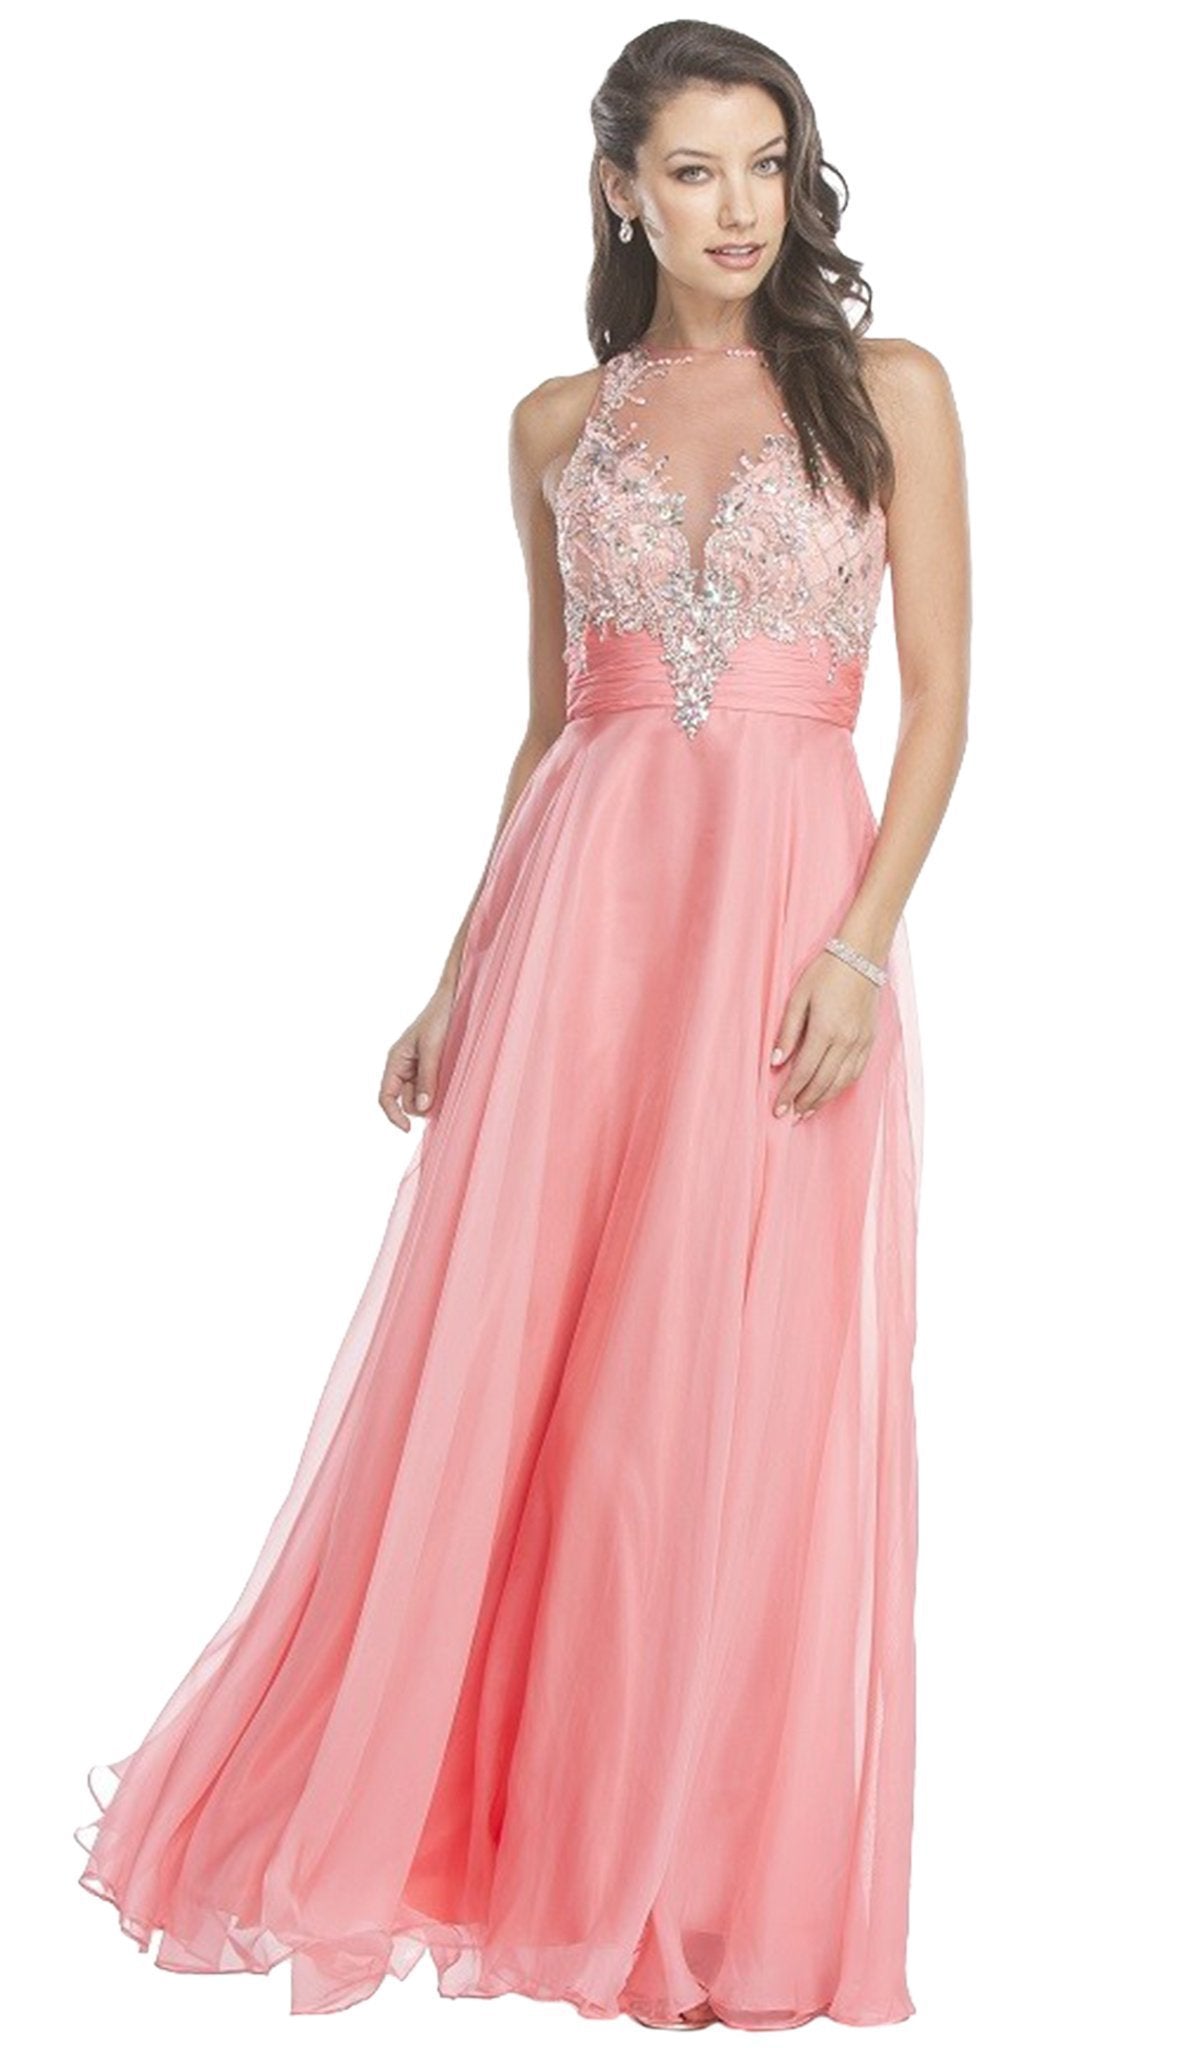 Image of Aspeed Design - Embellished Illusion Bodice A-Line Prom Dress